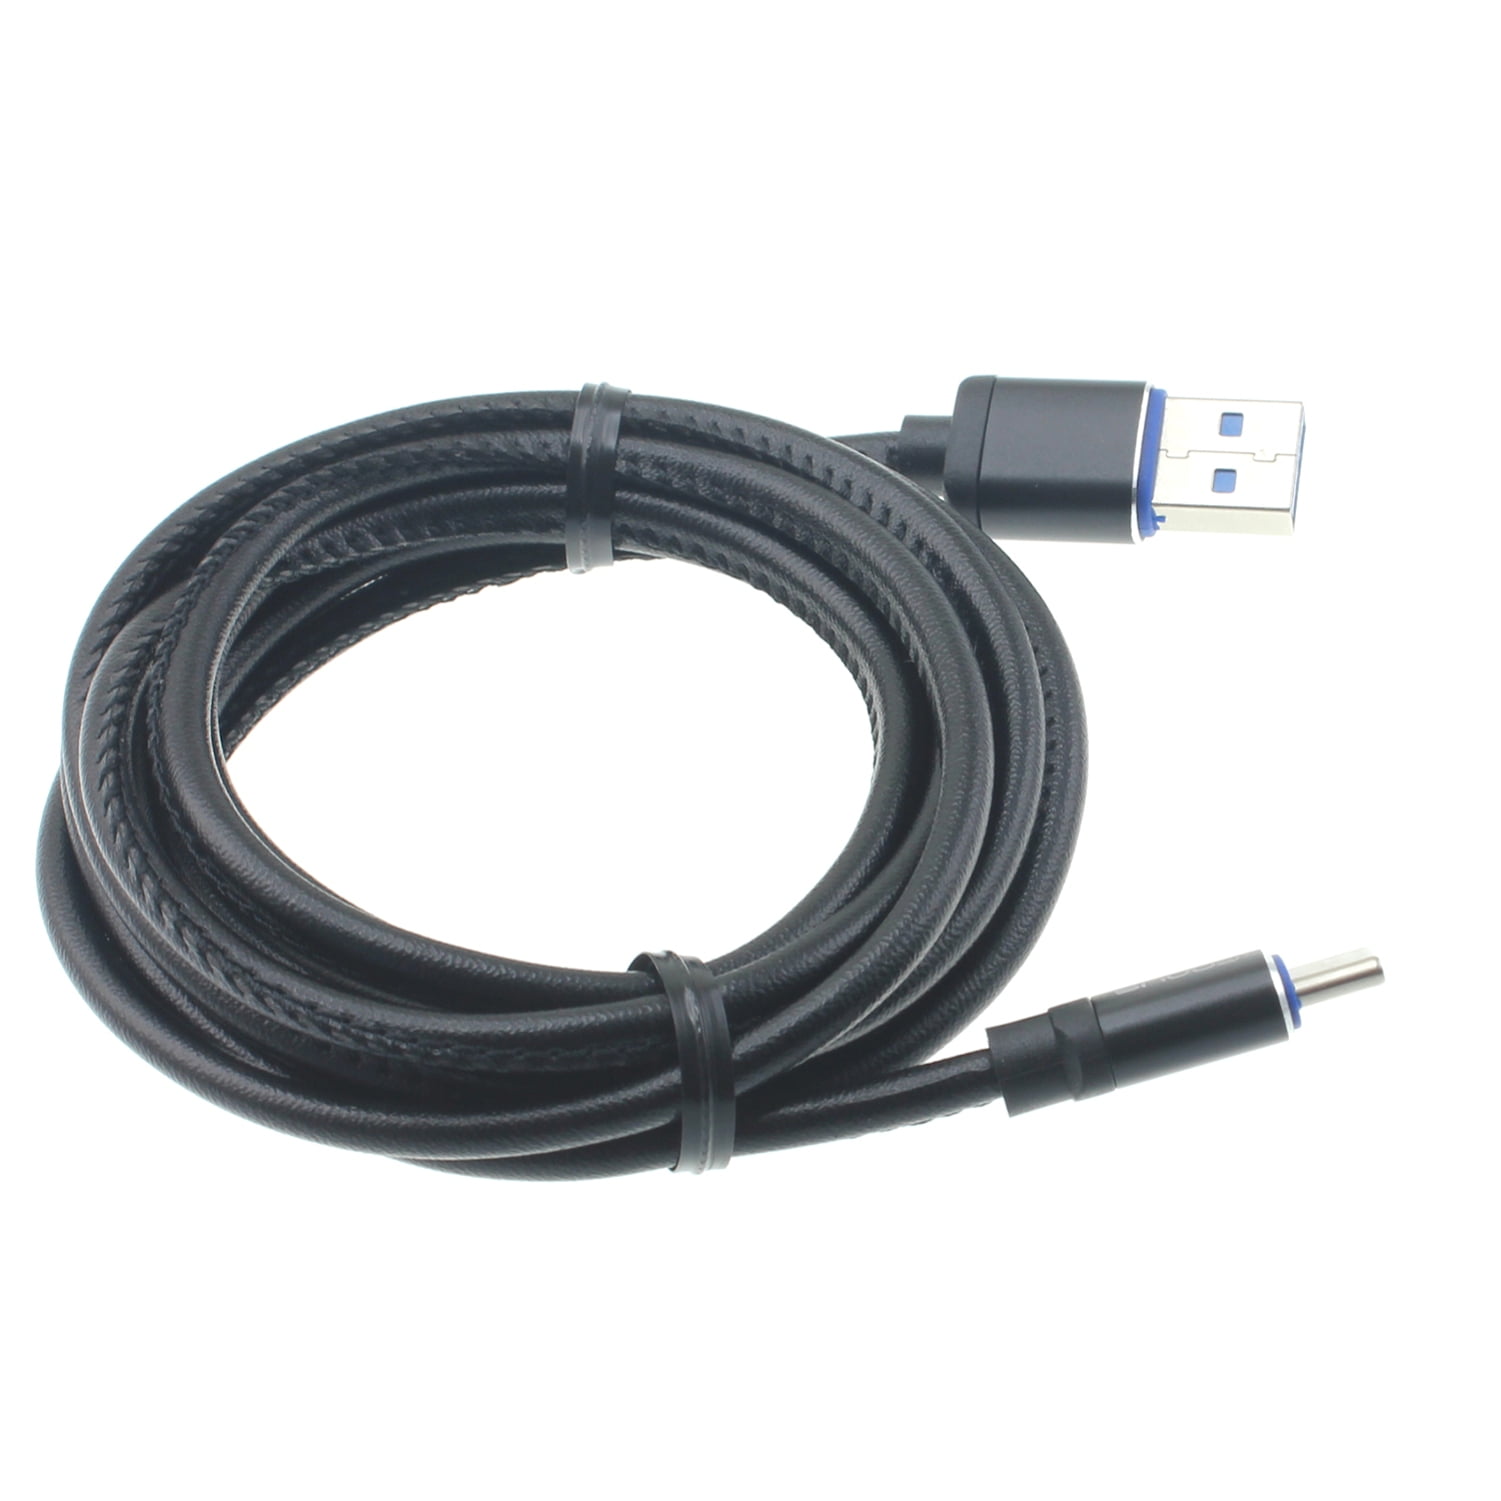 Moto G7 Power TypeC 6ft USB Cable, Power Cord USBC